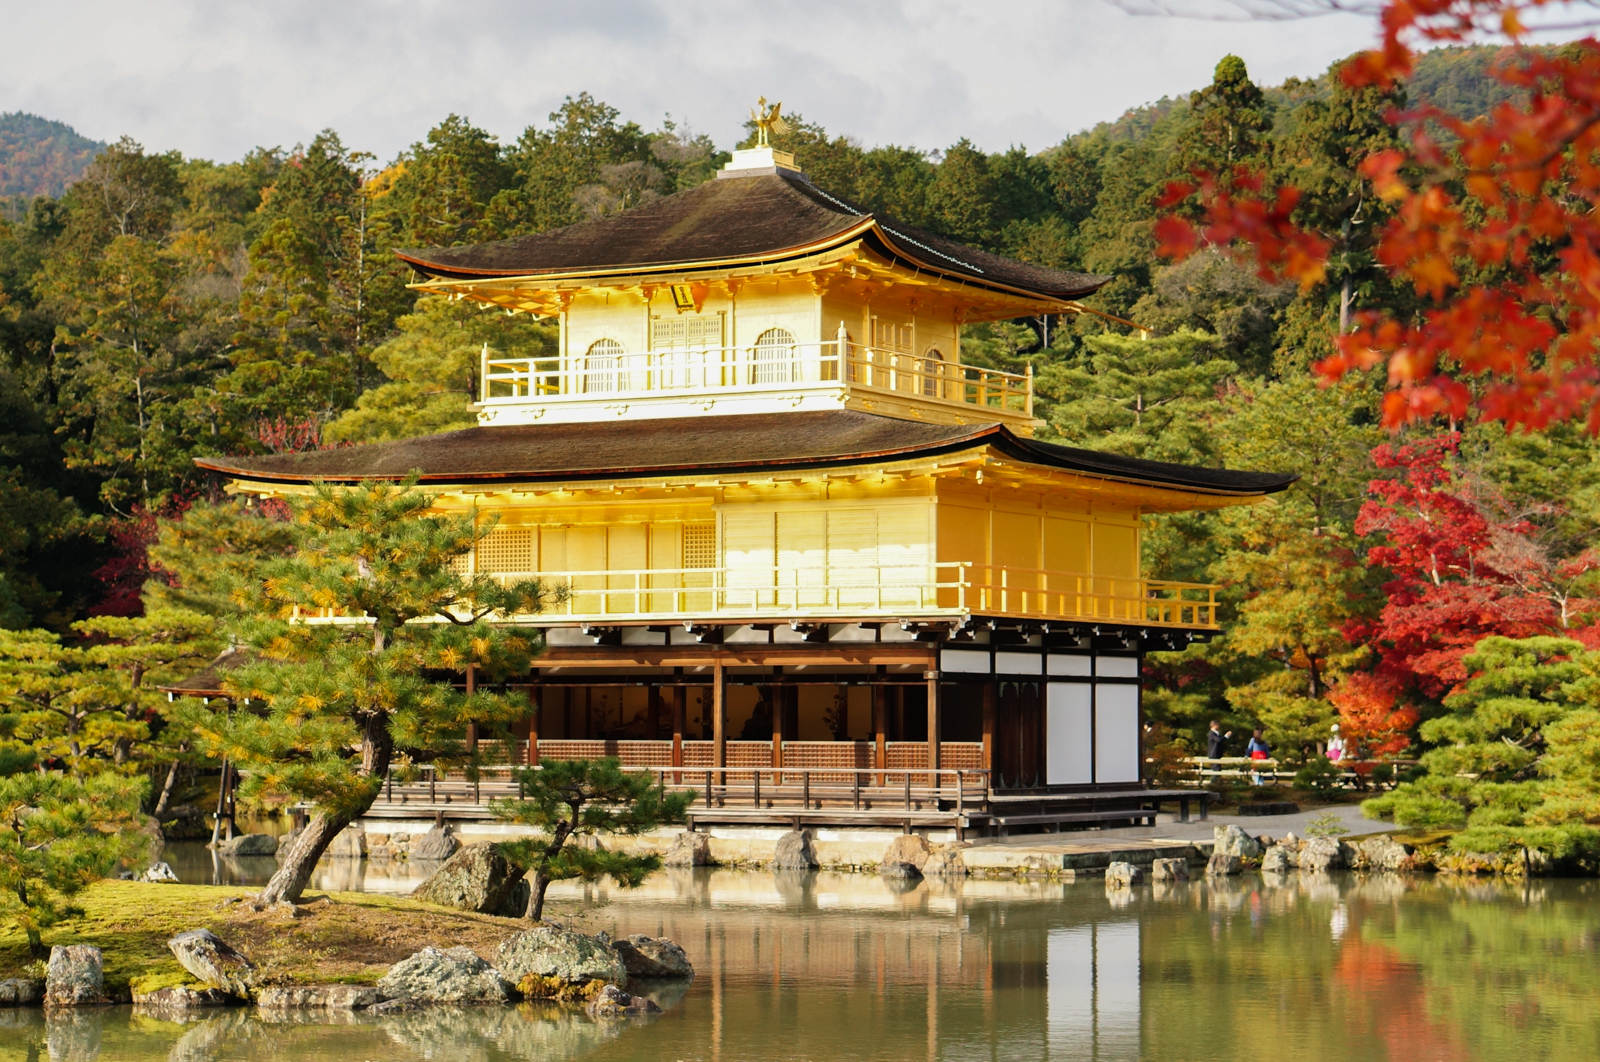 Kyoto, momiji kyoto, voyage kyoto, séjour kyoto, kyoto automne, kyoto fall, kyoto autumn, kyoto érables, kinkaku-ji, temple du pavillon d'or